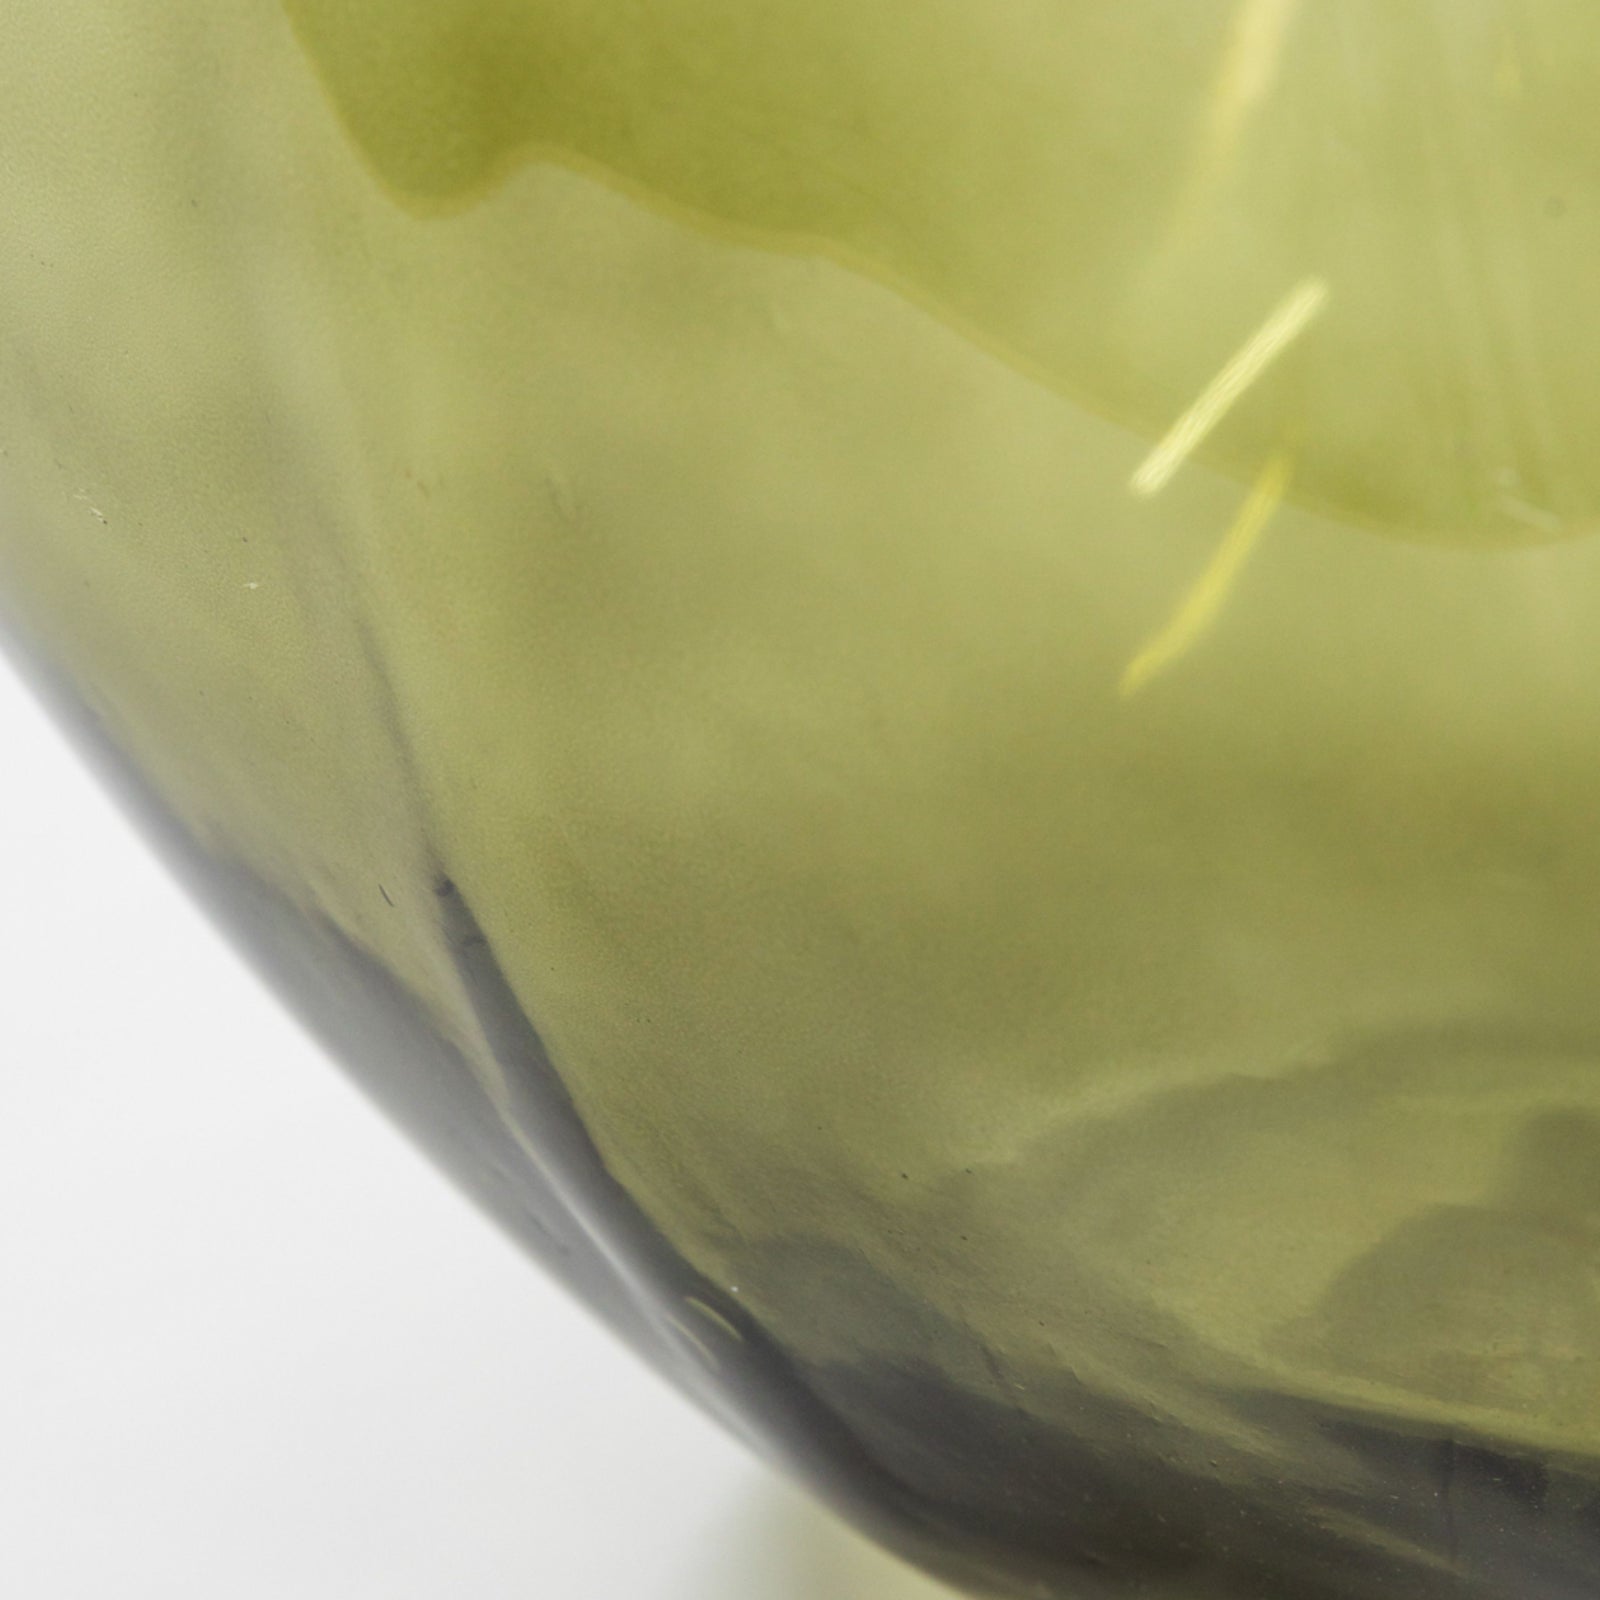 Large Green Bottle Vase - The Farthing